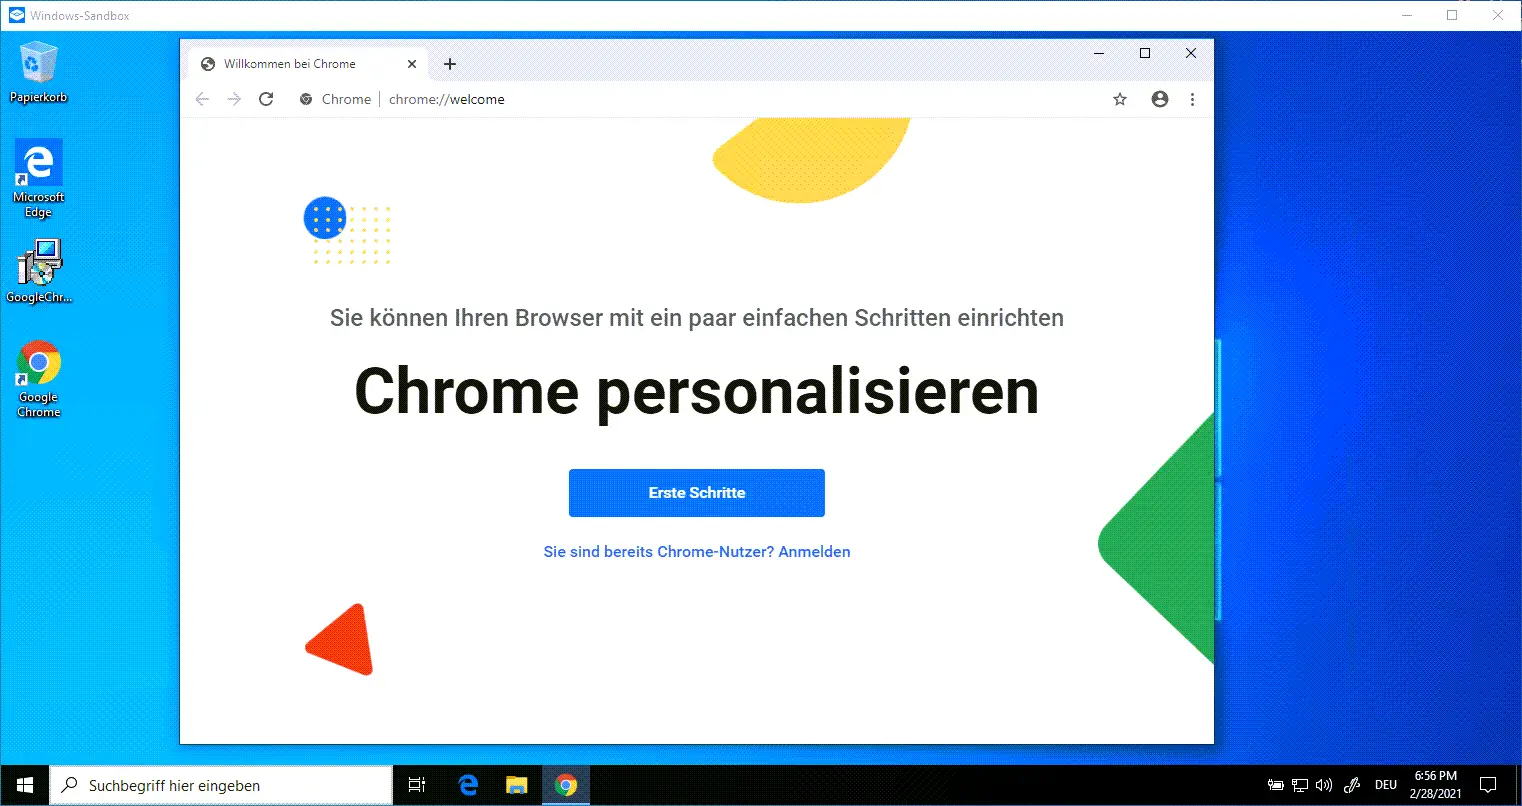 Windows Sandbox with Google Chrome